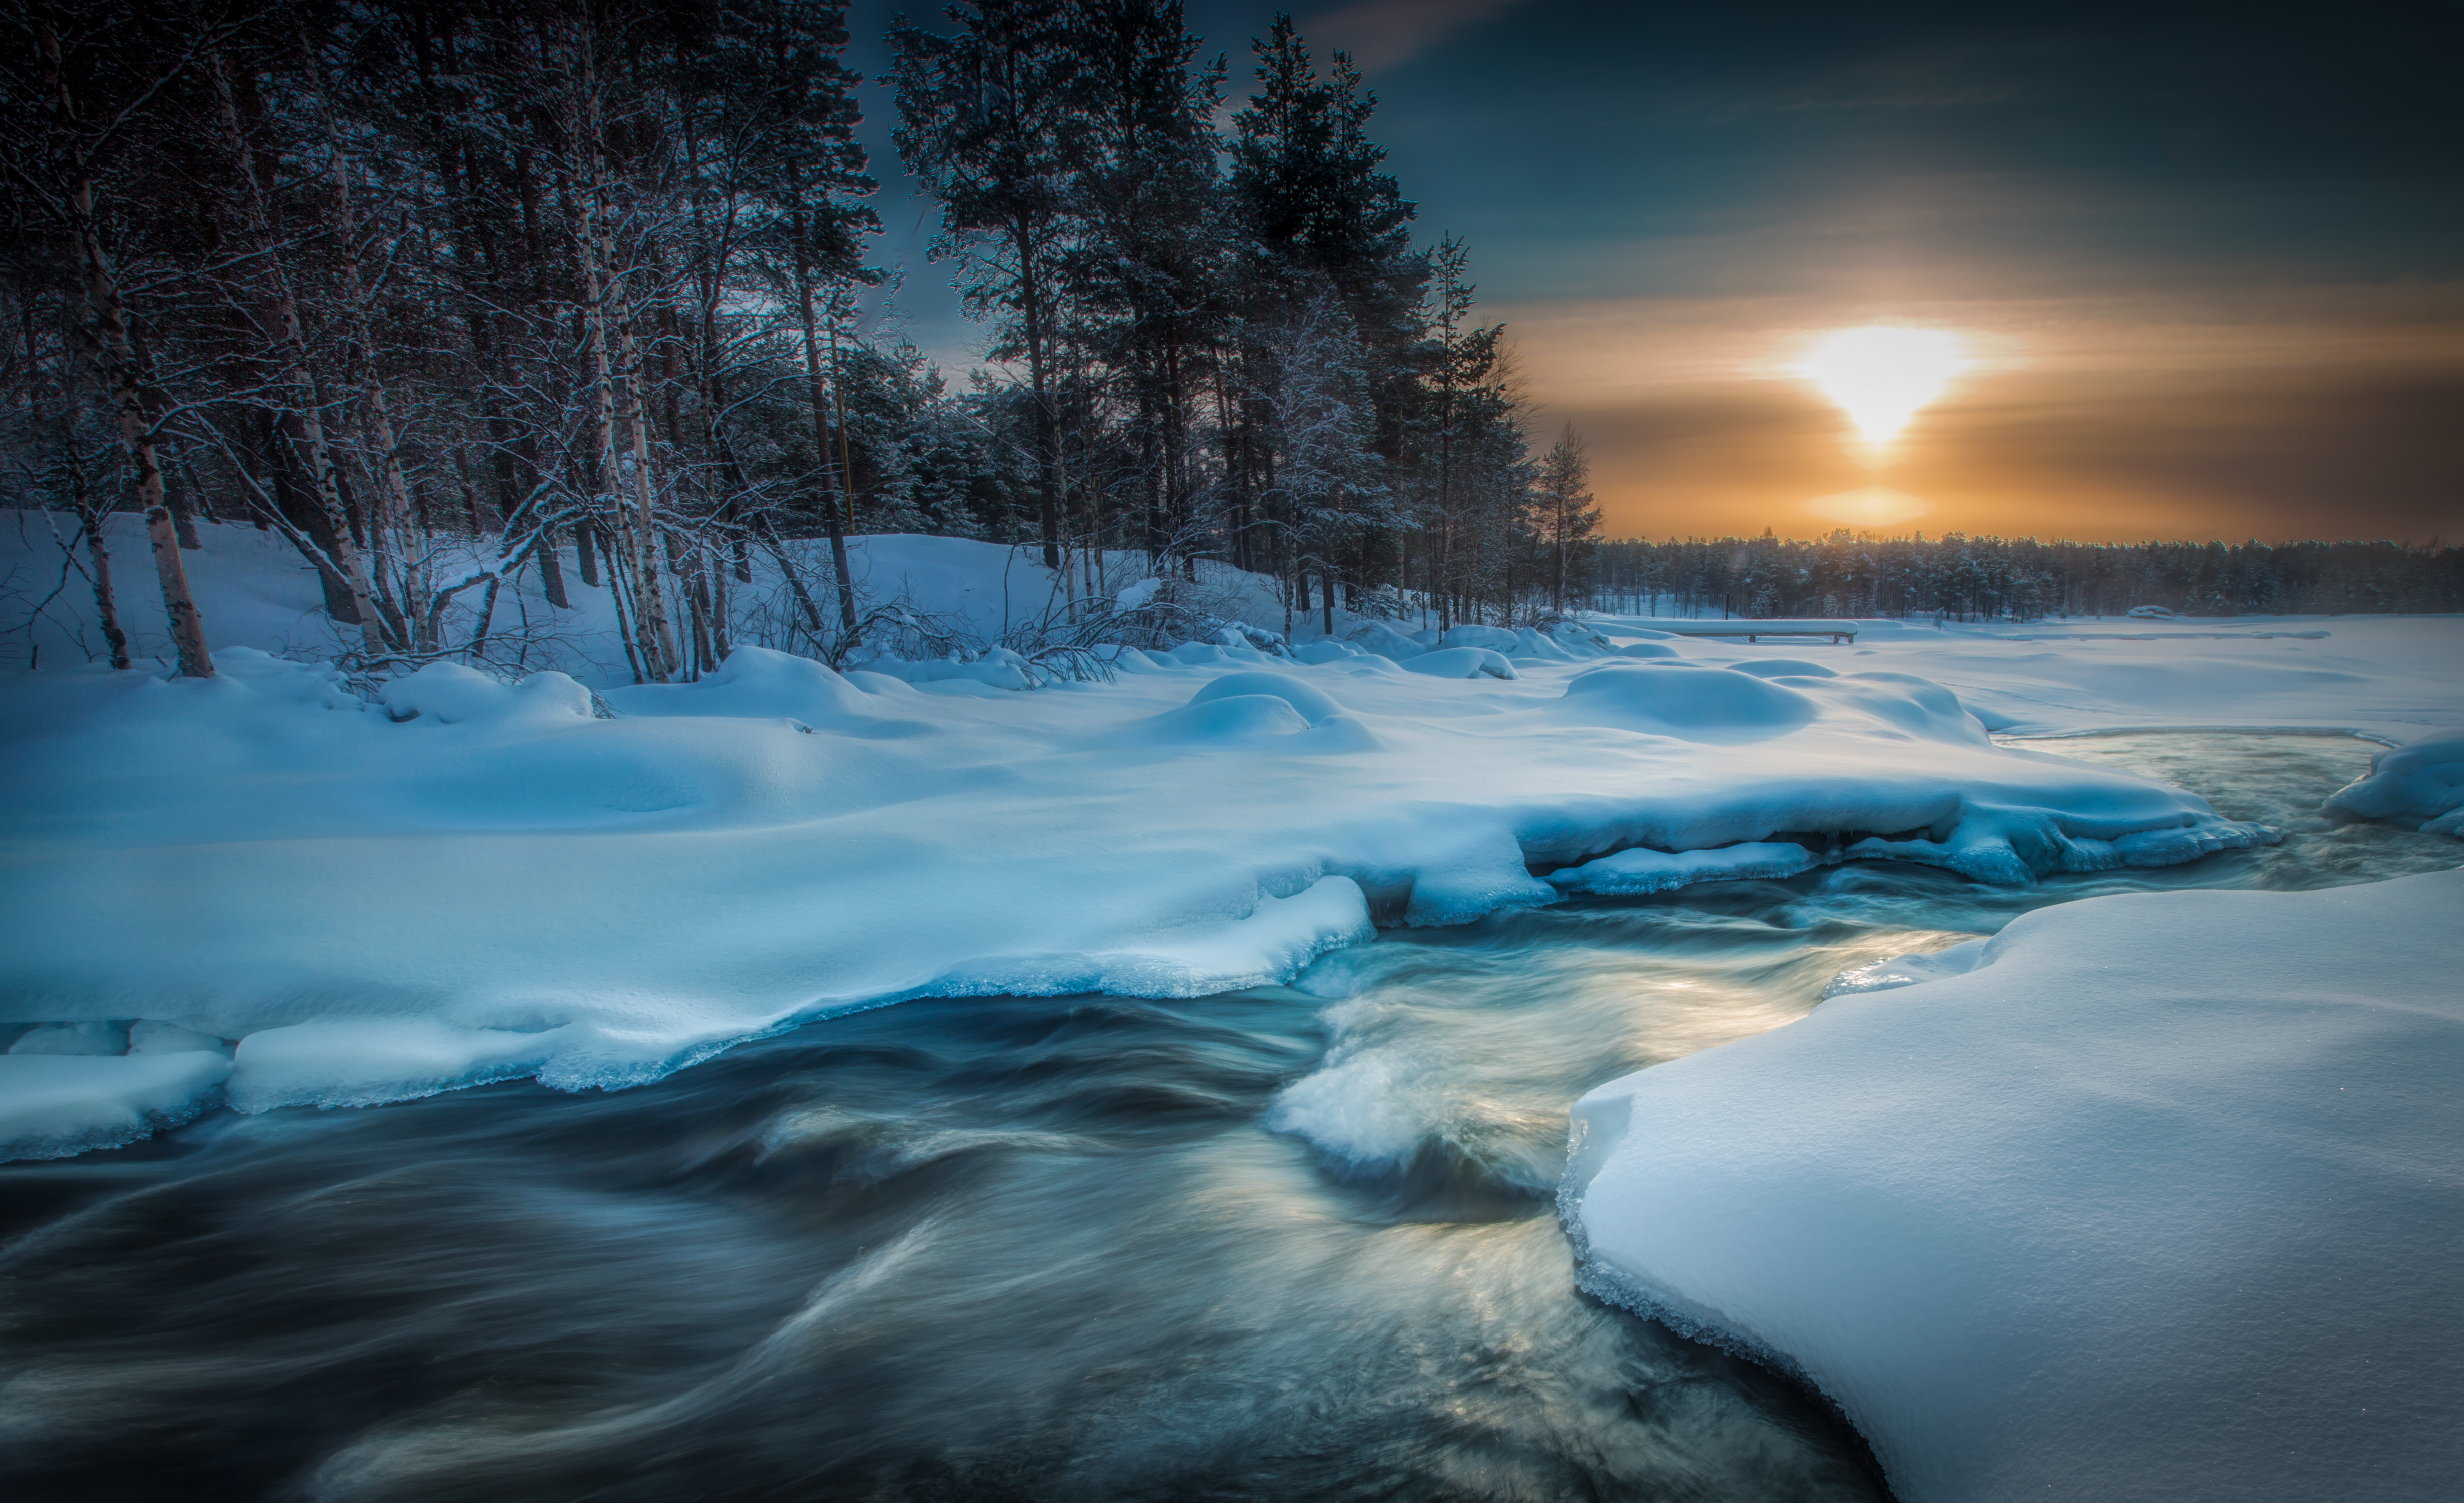 Wallpapers winter landscapes Finland on the desktop